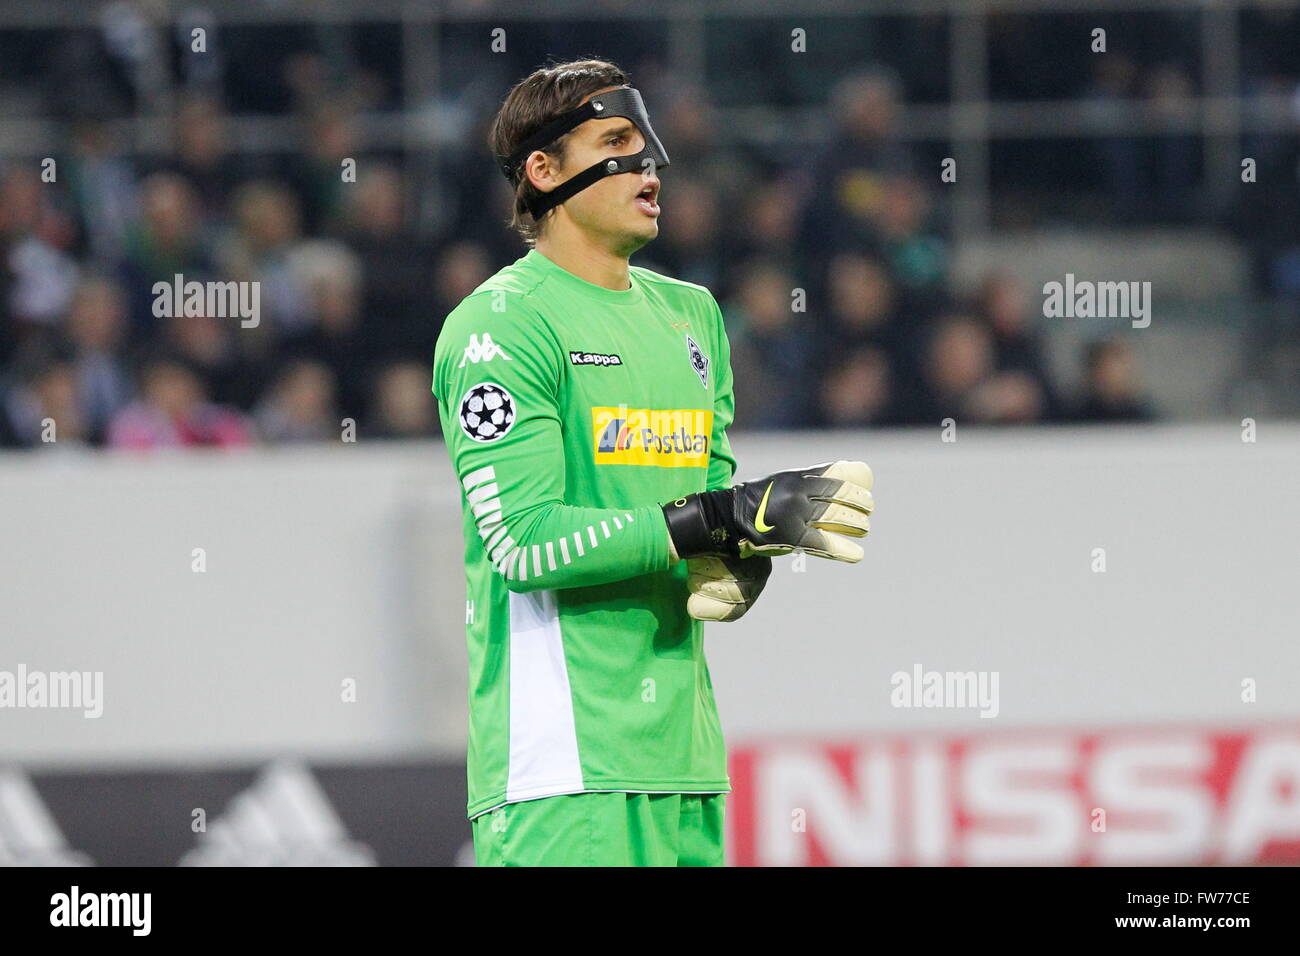 Yann Sommer in action during the champion league match Monchengladbach  Juventus Monchengladbach, November 3, 2015 Stock Photo